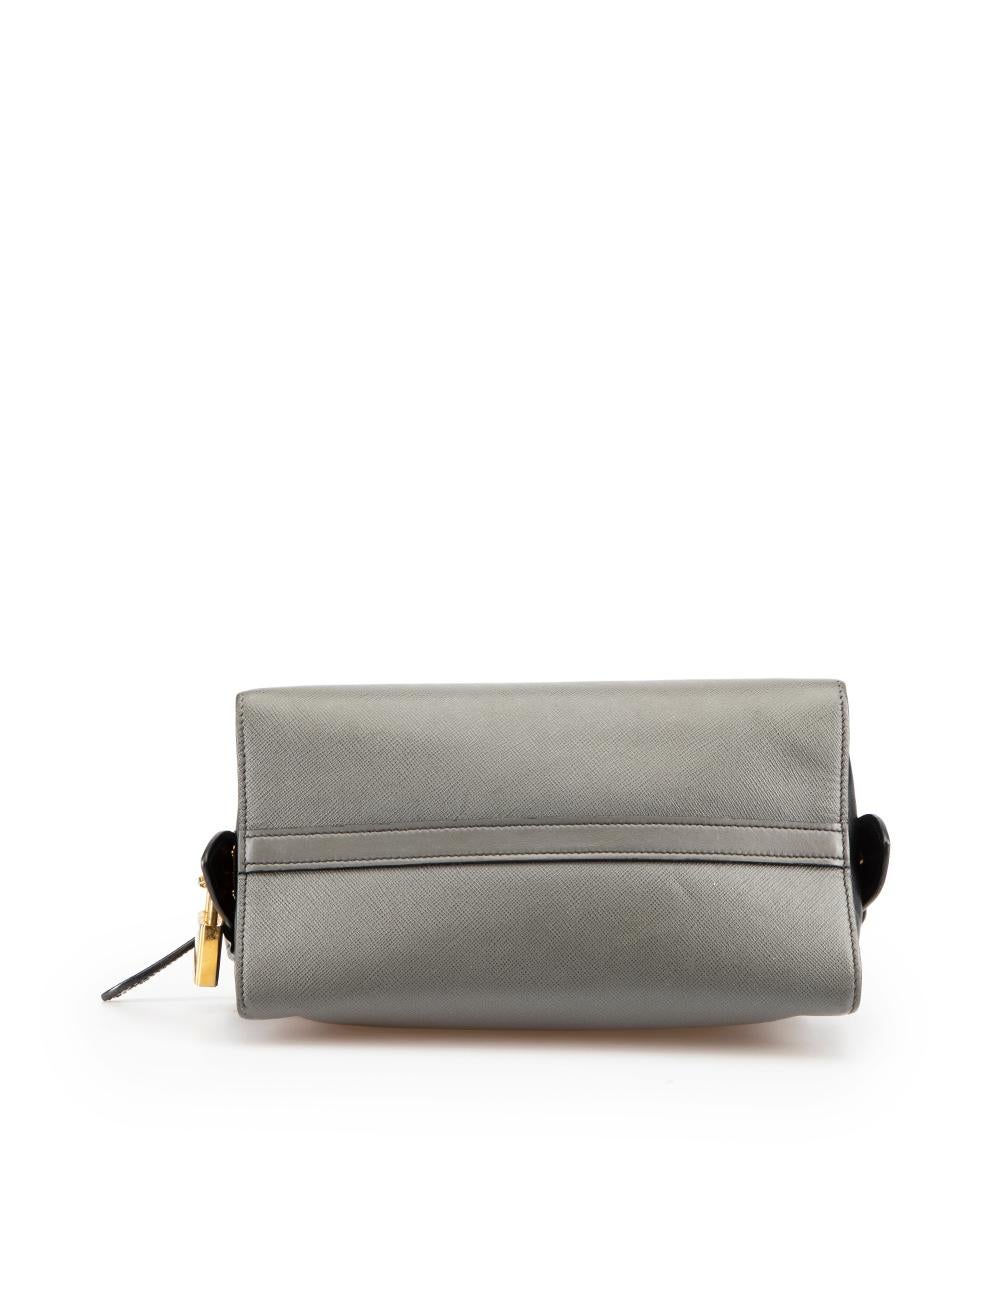 Women's Prada Black Leather Esplanade Handbag For Sale